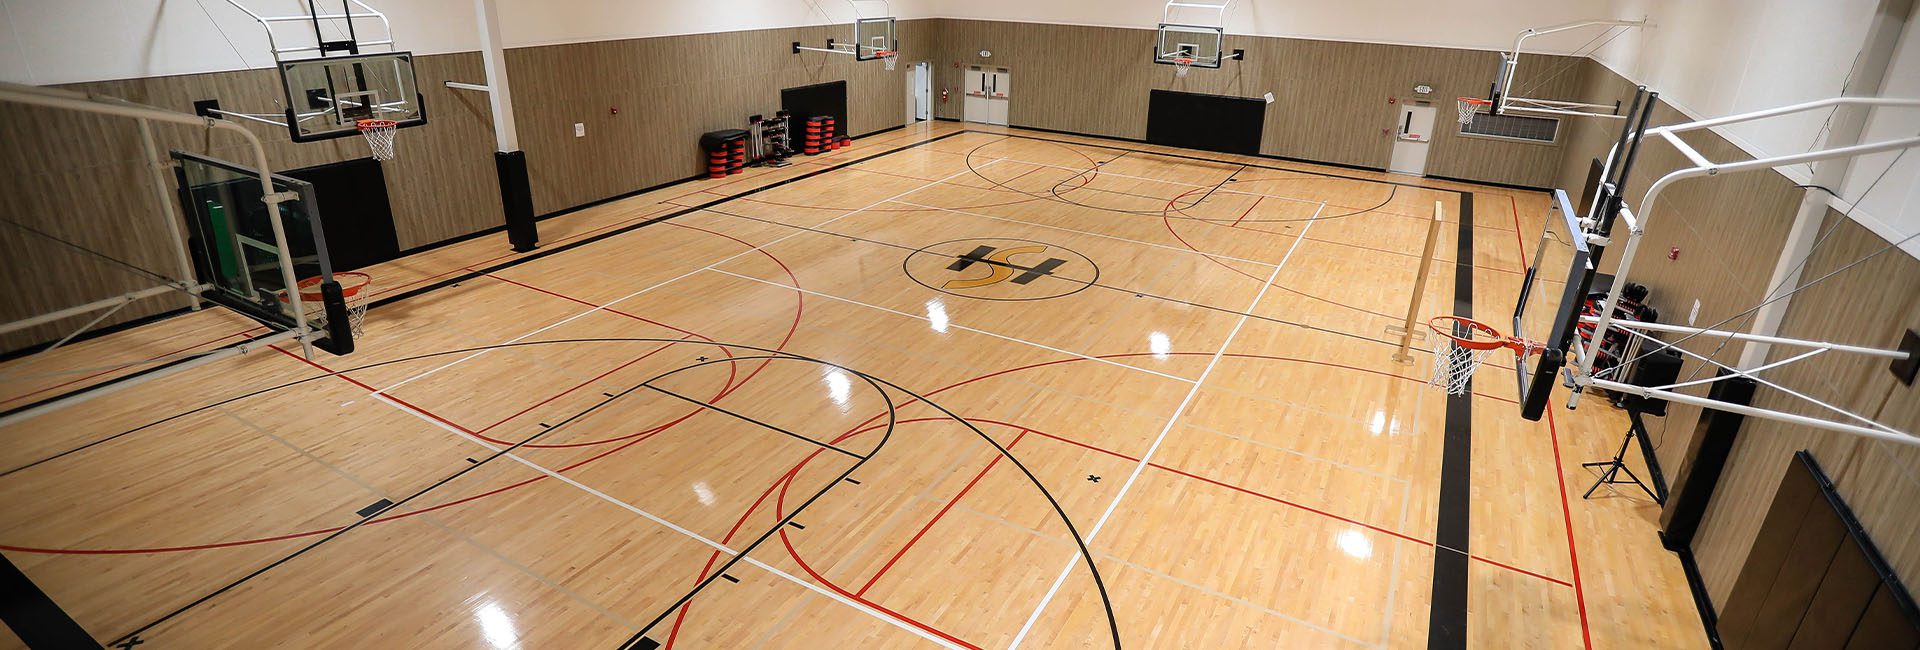 indoor full court basketball